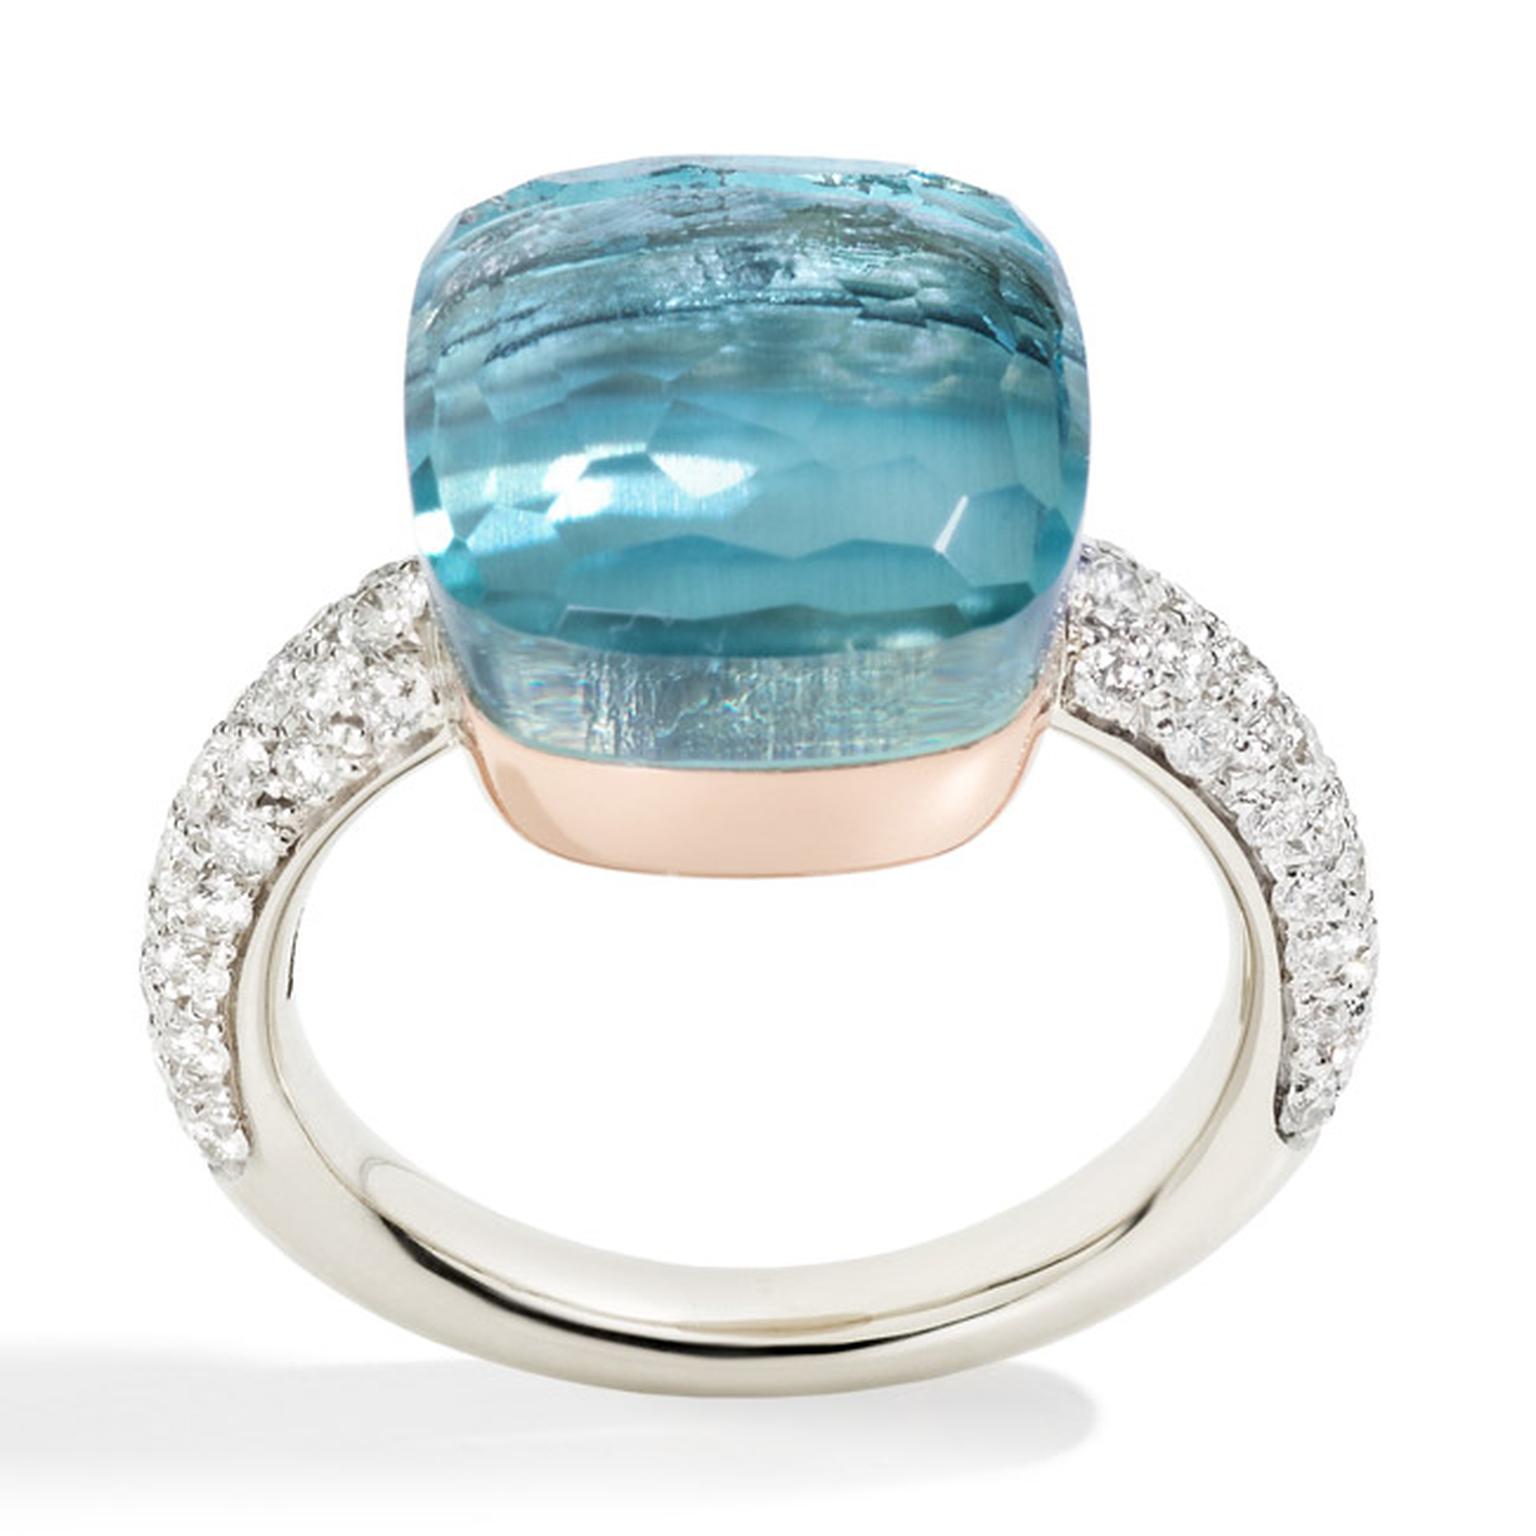 Pomellato Nudo ring with blue topaz and diamonds (£3,980).